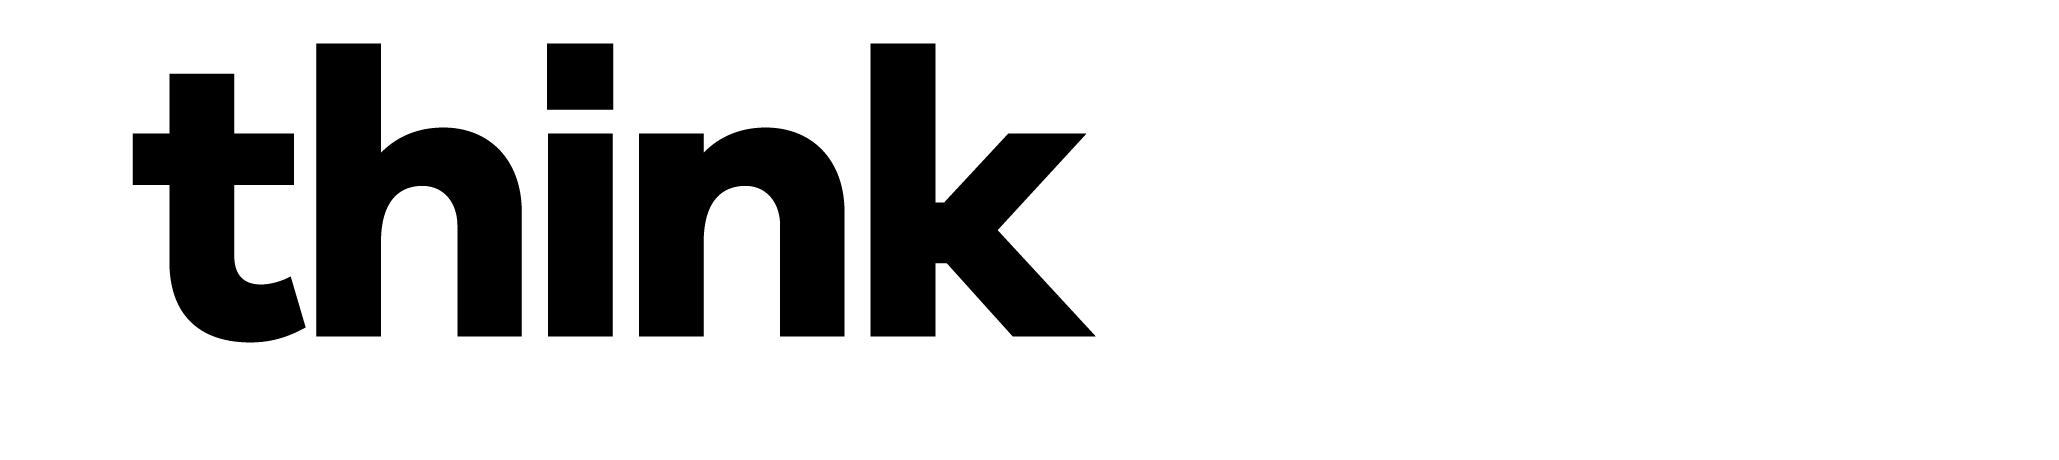 Think Tank logo reverse RGB